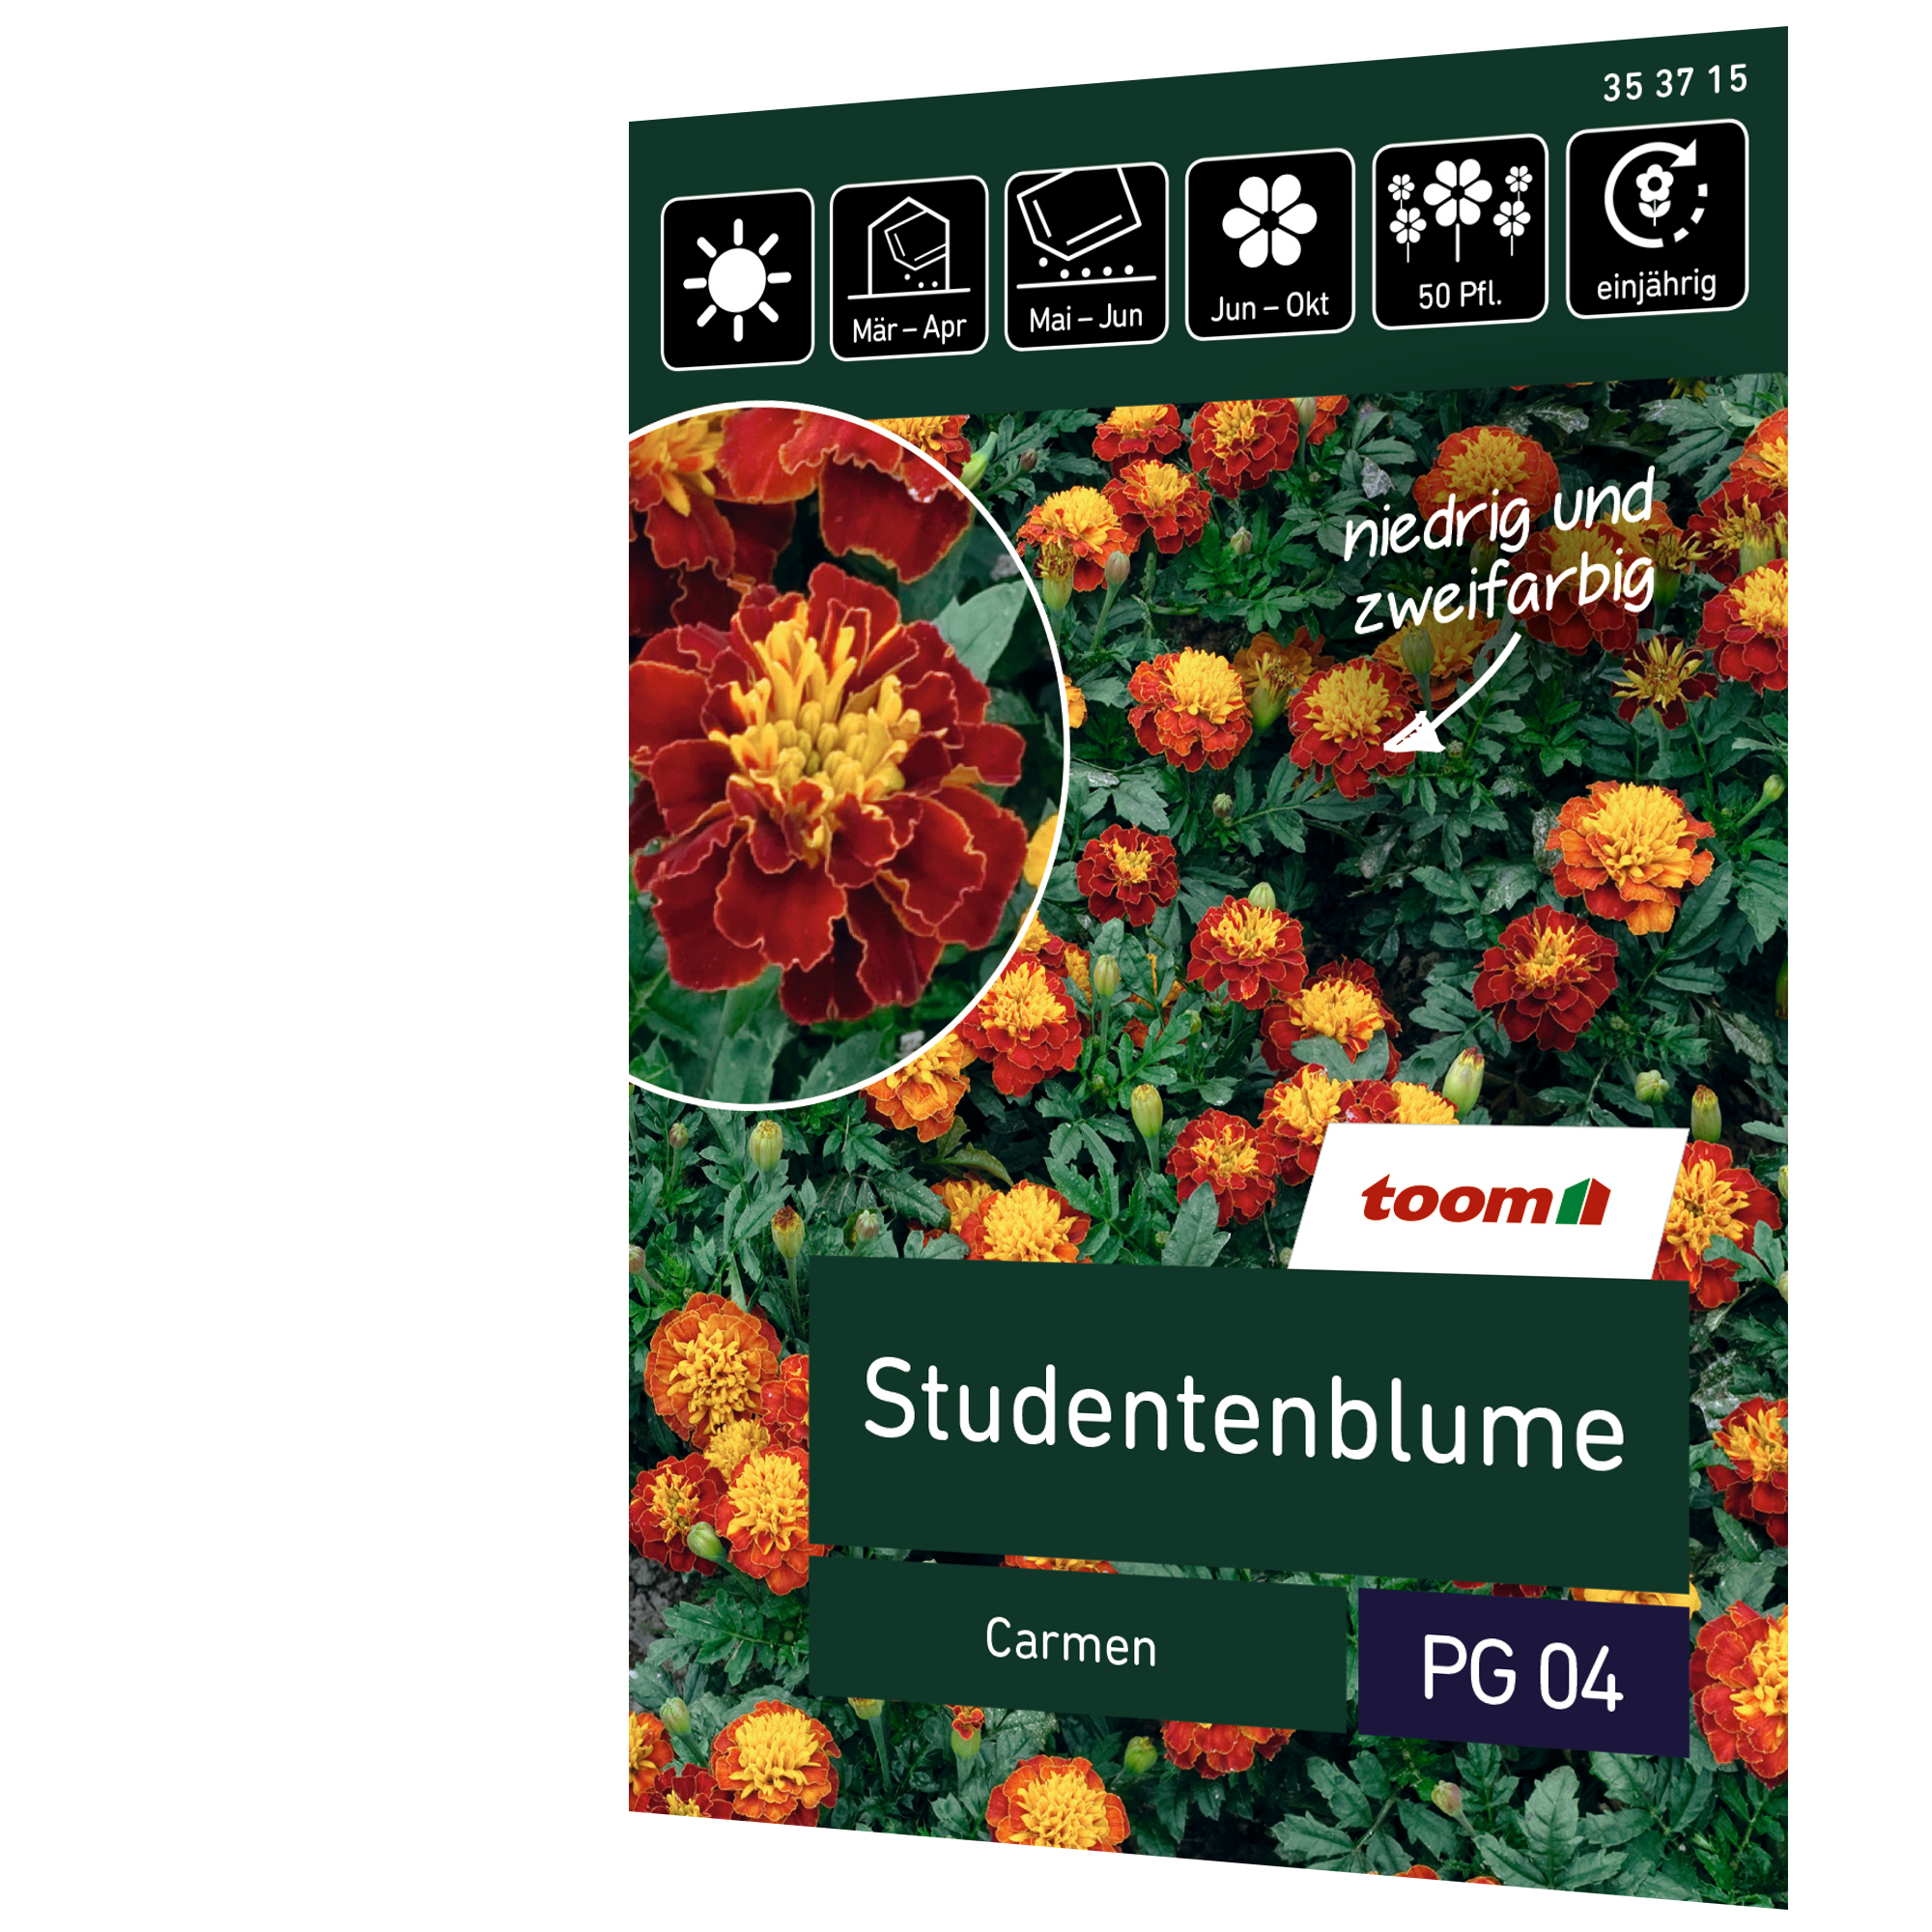 Studentenblume 'Carmen' + product picture